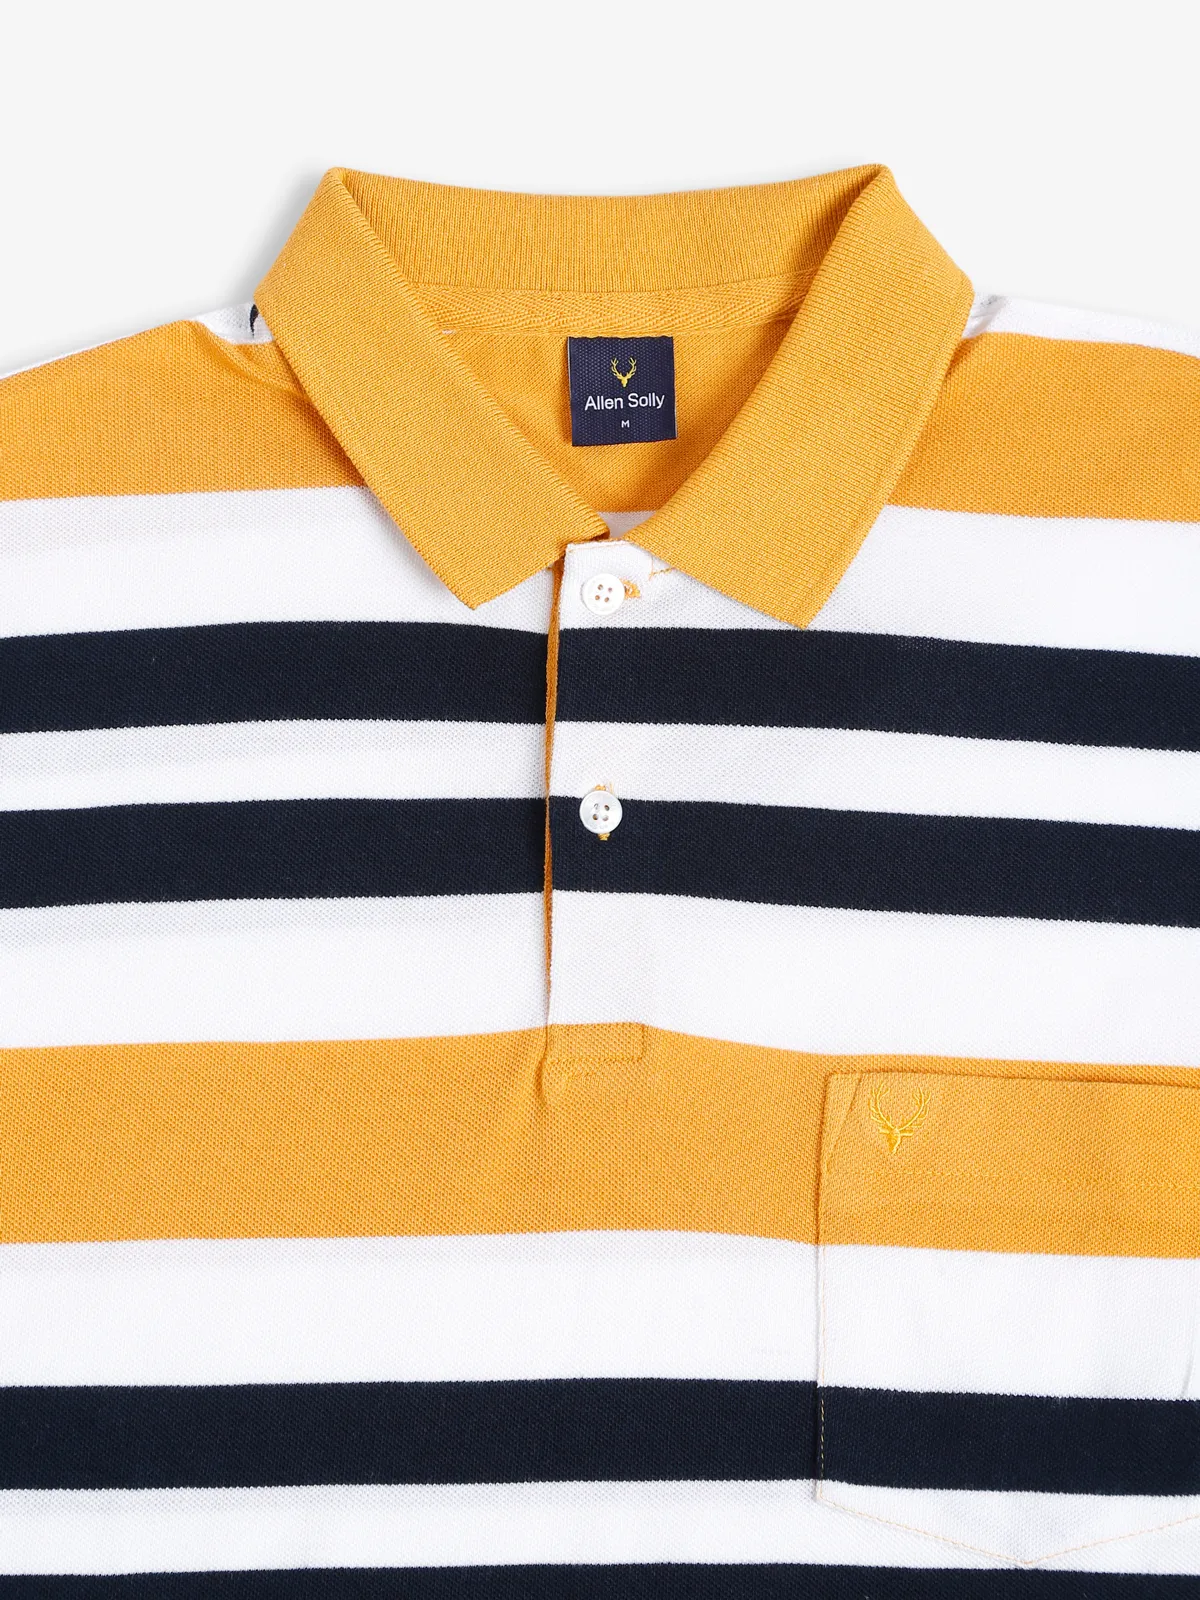 Allen Solly yellow stripe t shirt